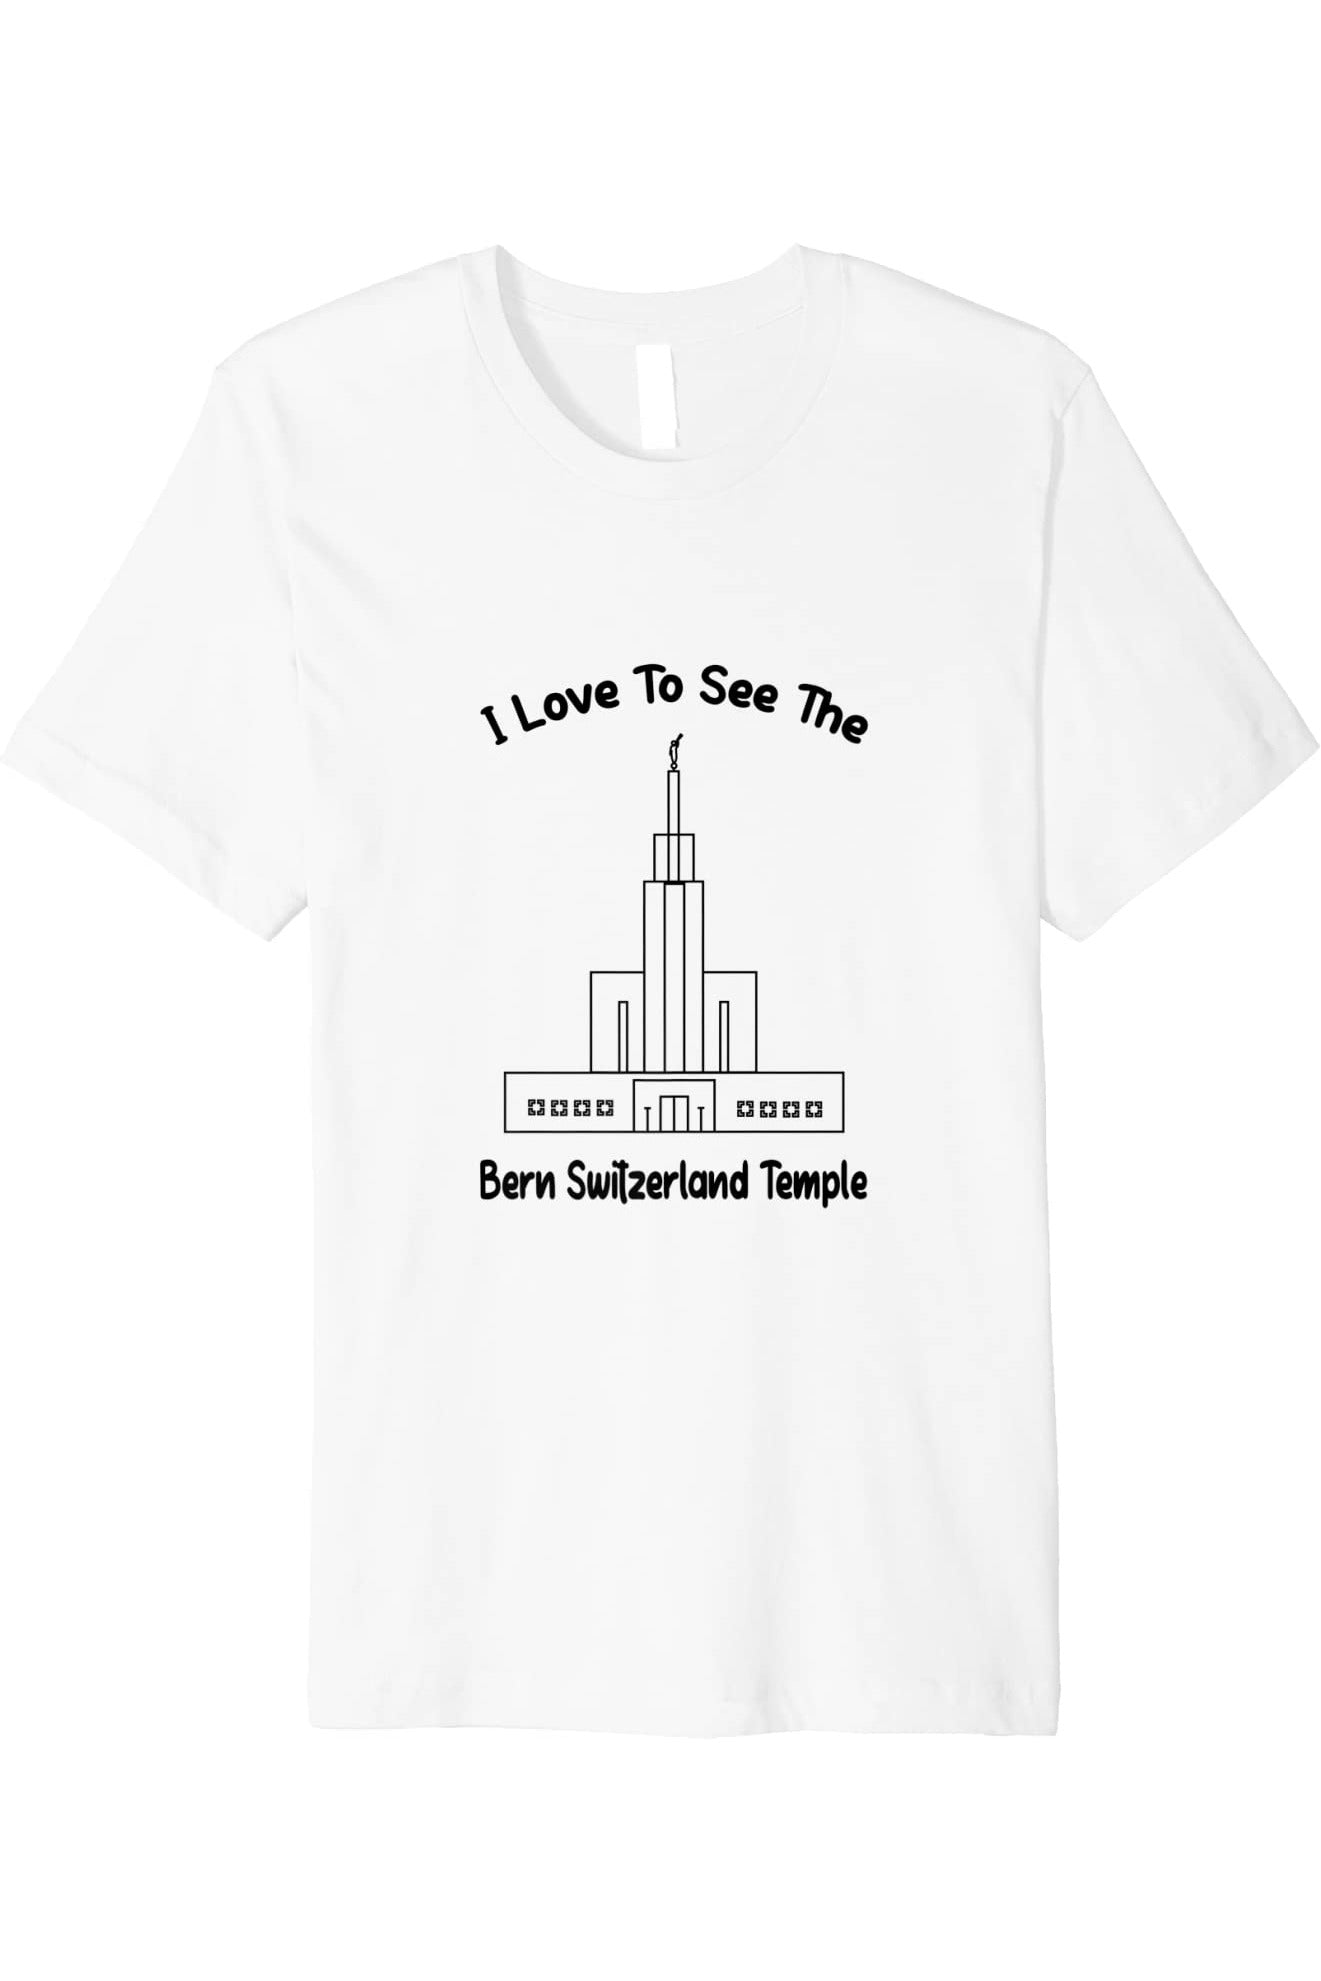 Bern Switzerland Temple T-Shirt - Premium - Primary Style (English) US